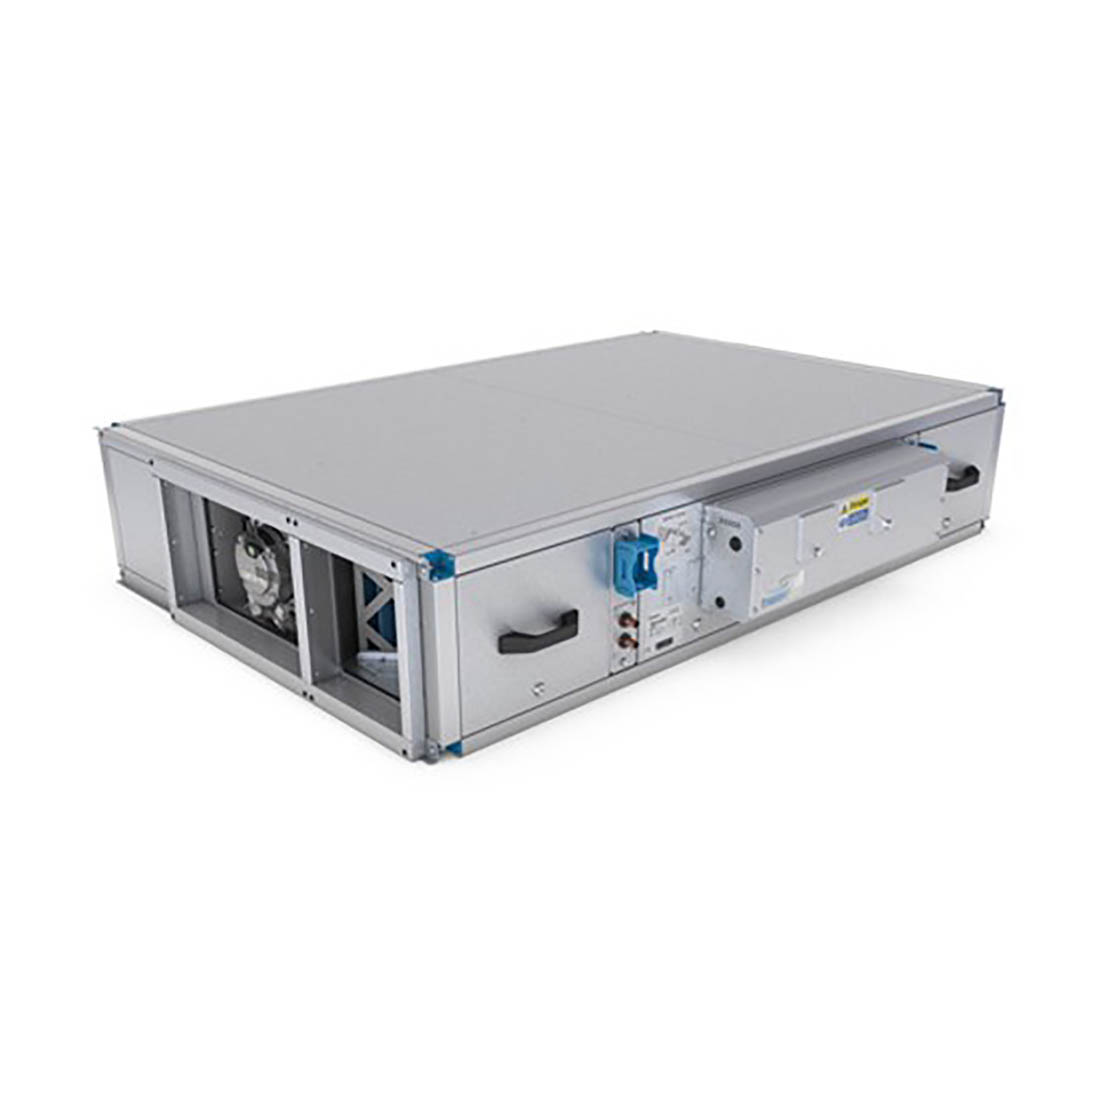 Nuaire Xboxer XBC-55 Commercial Heat Exchange Unit - (Price Varies Upon Appraisal)